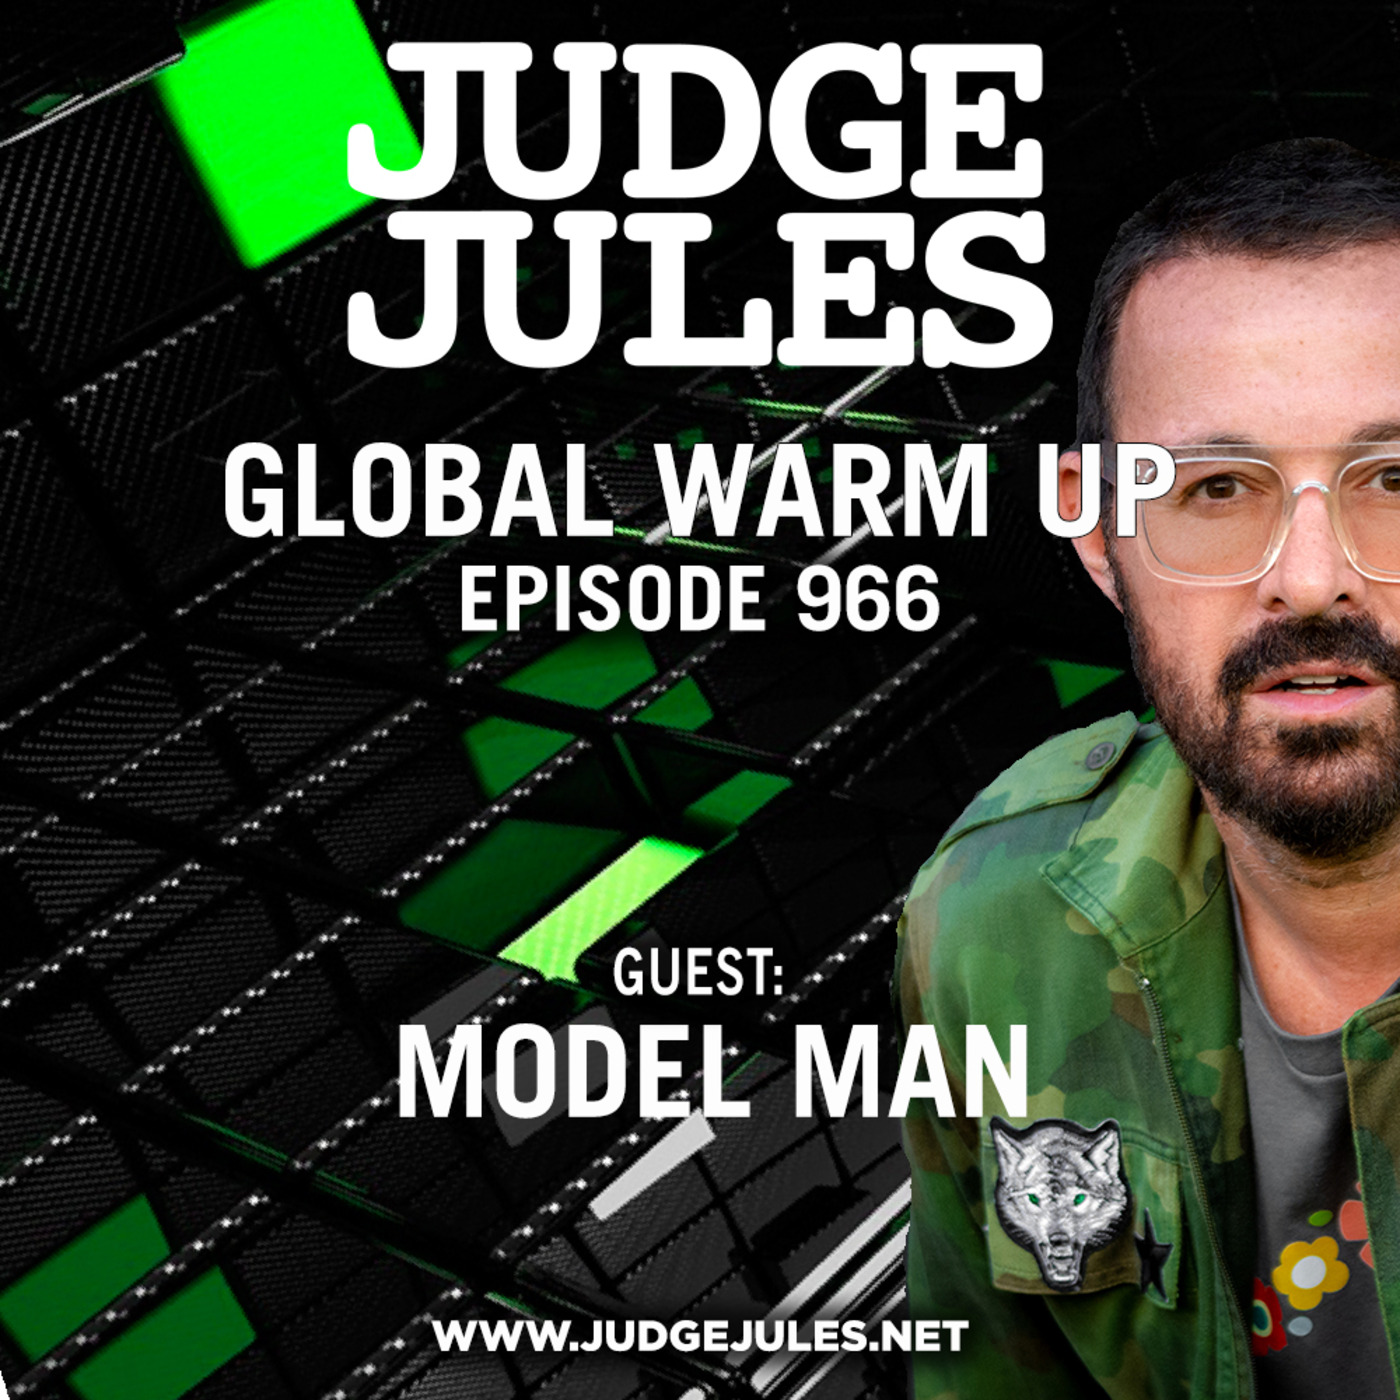 Episode 966: JUDGE JULES PRESENTS THE GLOBAL WARM UP EPISODE 966